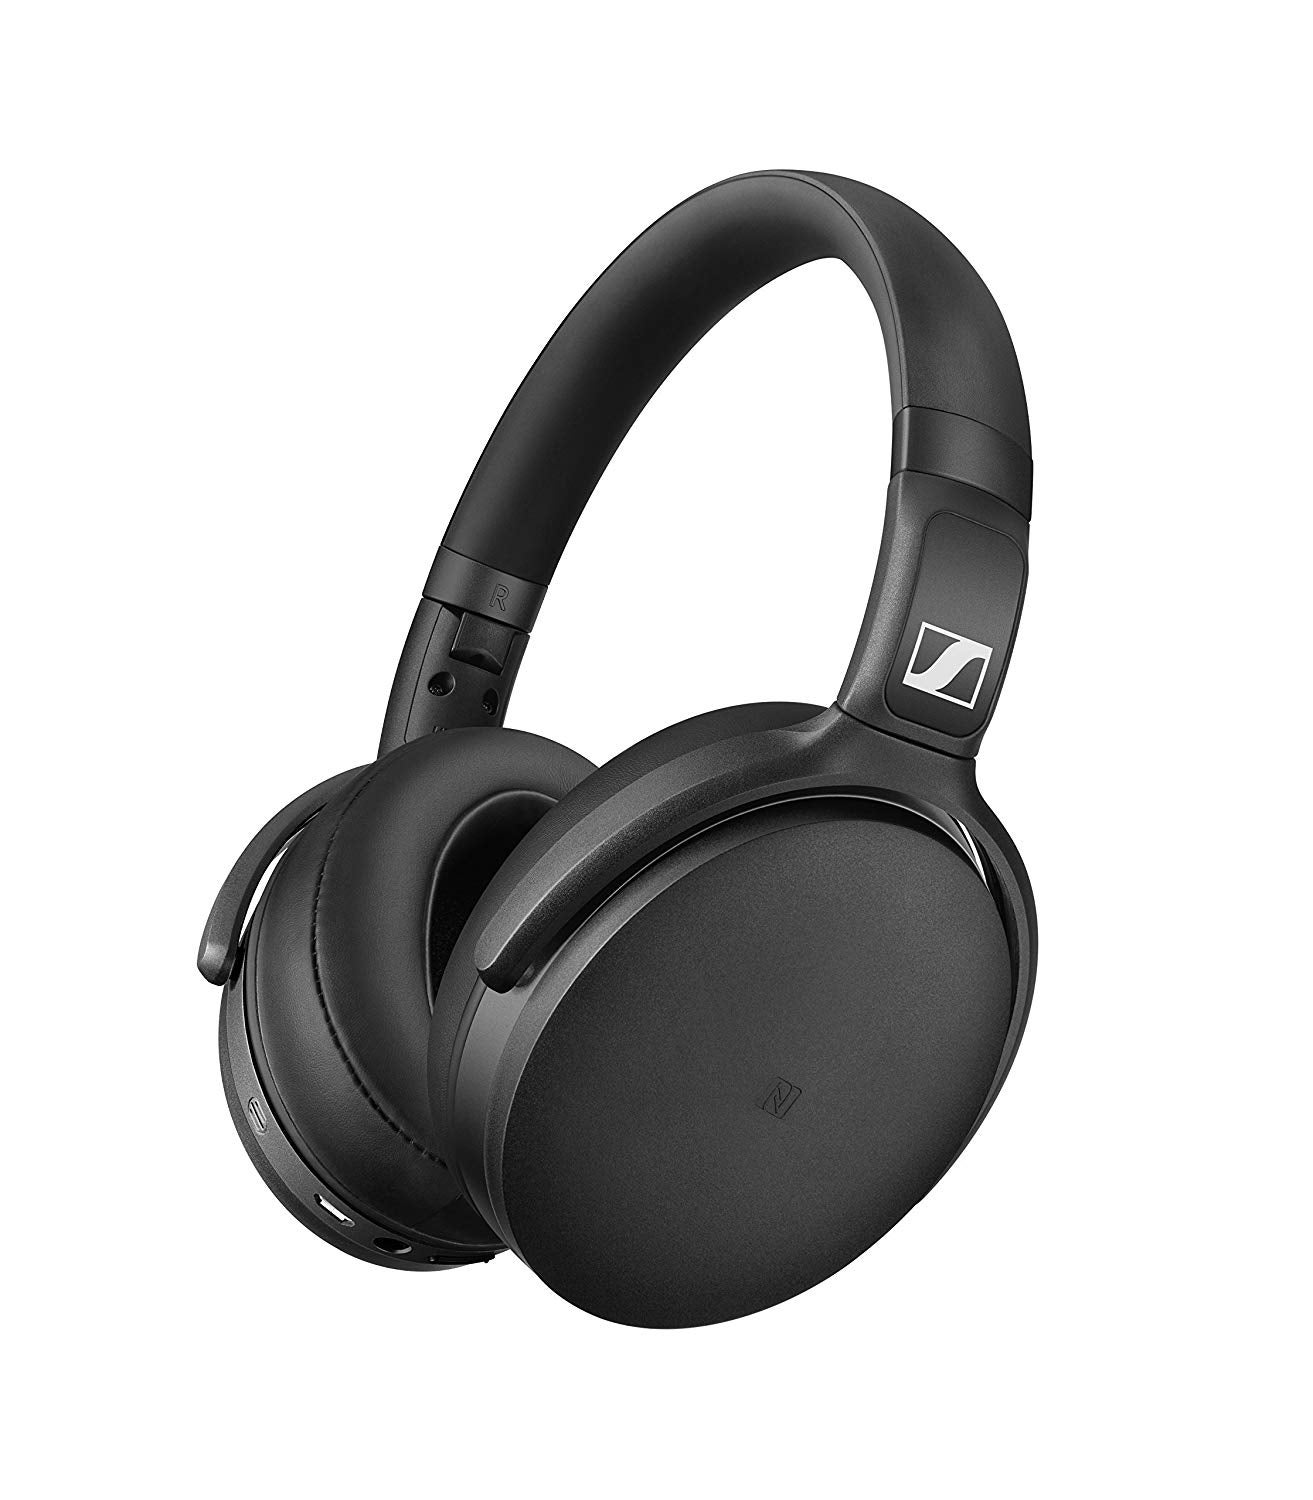 Image for Amazon Prime Day sale discounts Bose QuietComfort 25 and Sennheiser wireless headphones